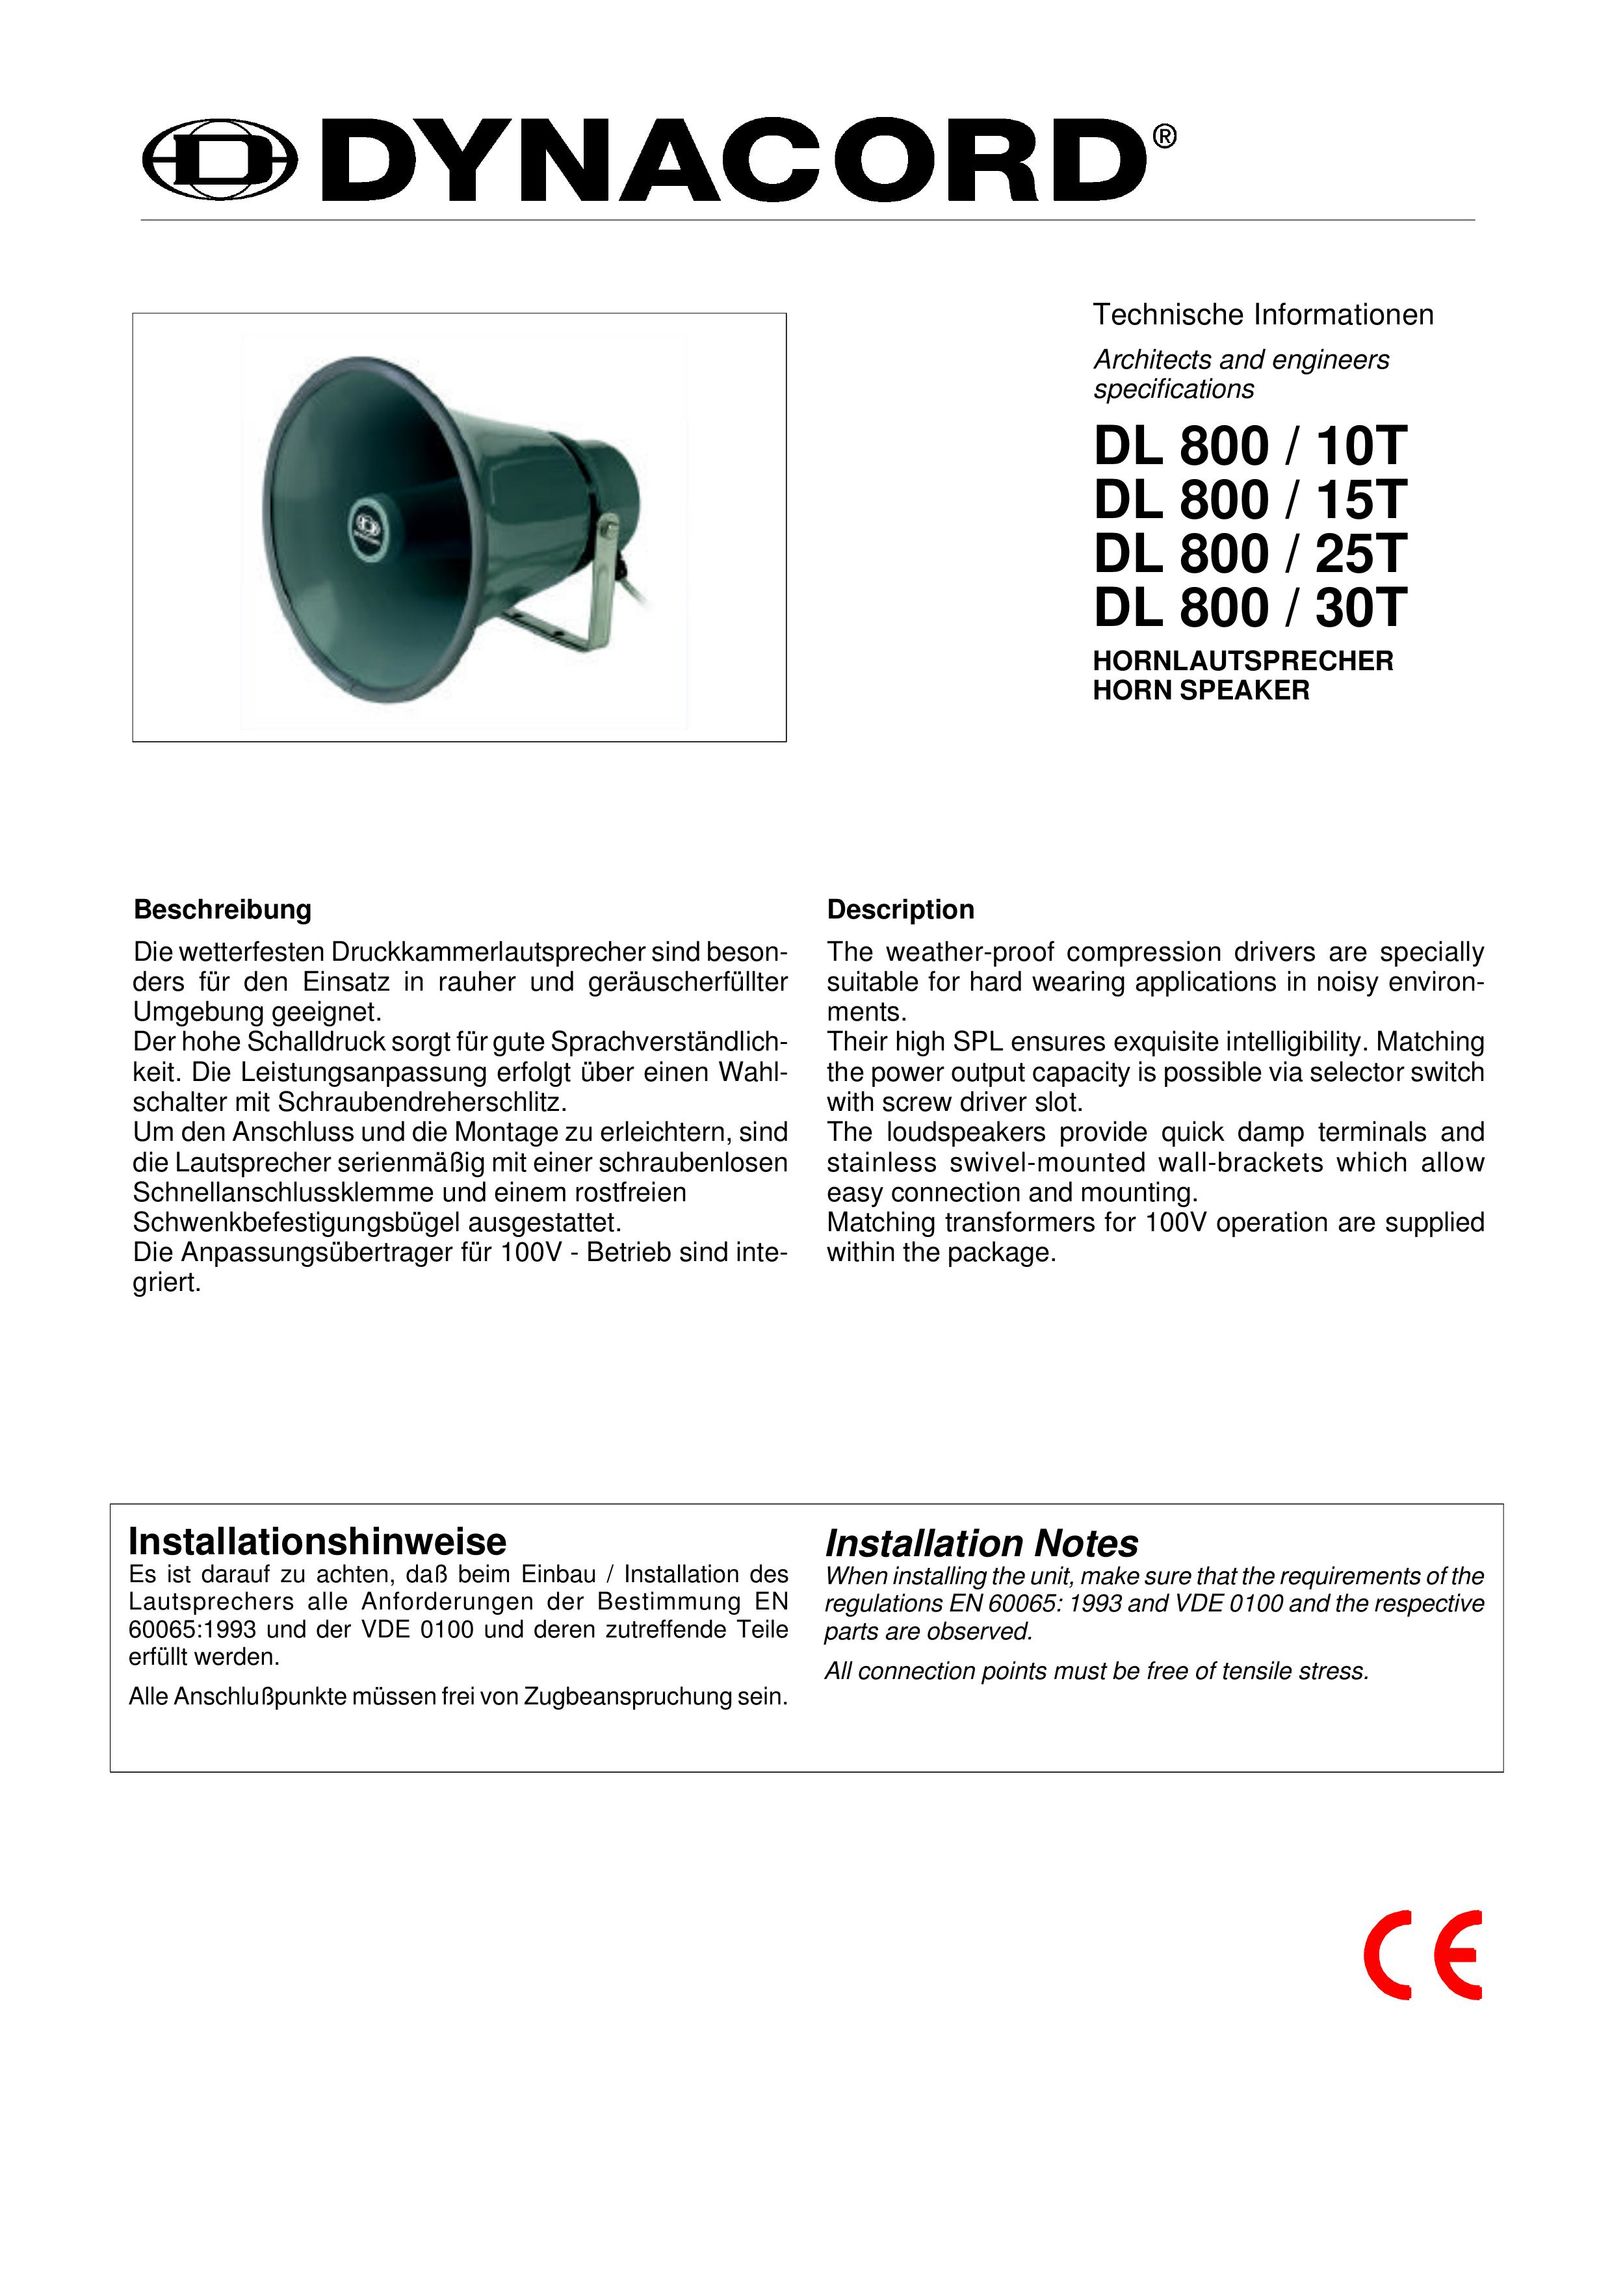 Dynacord DL 800 / 30T Speaker User Manual